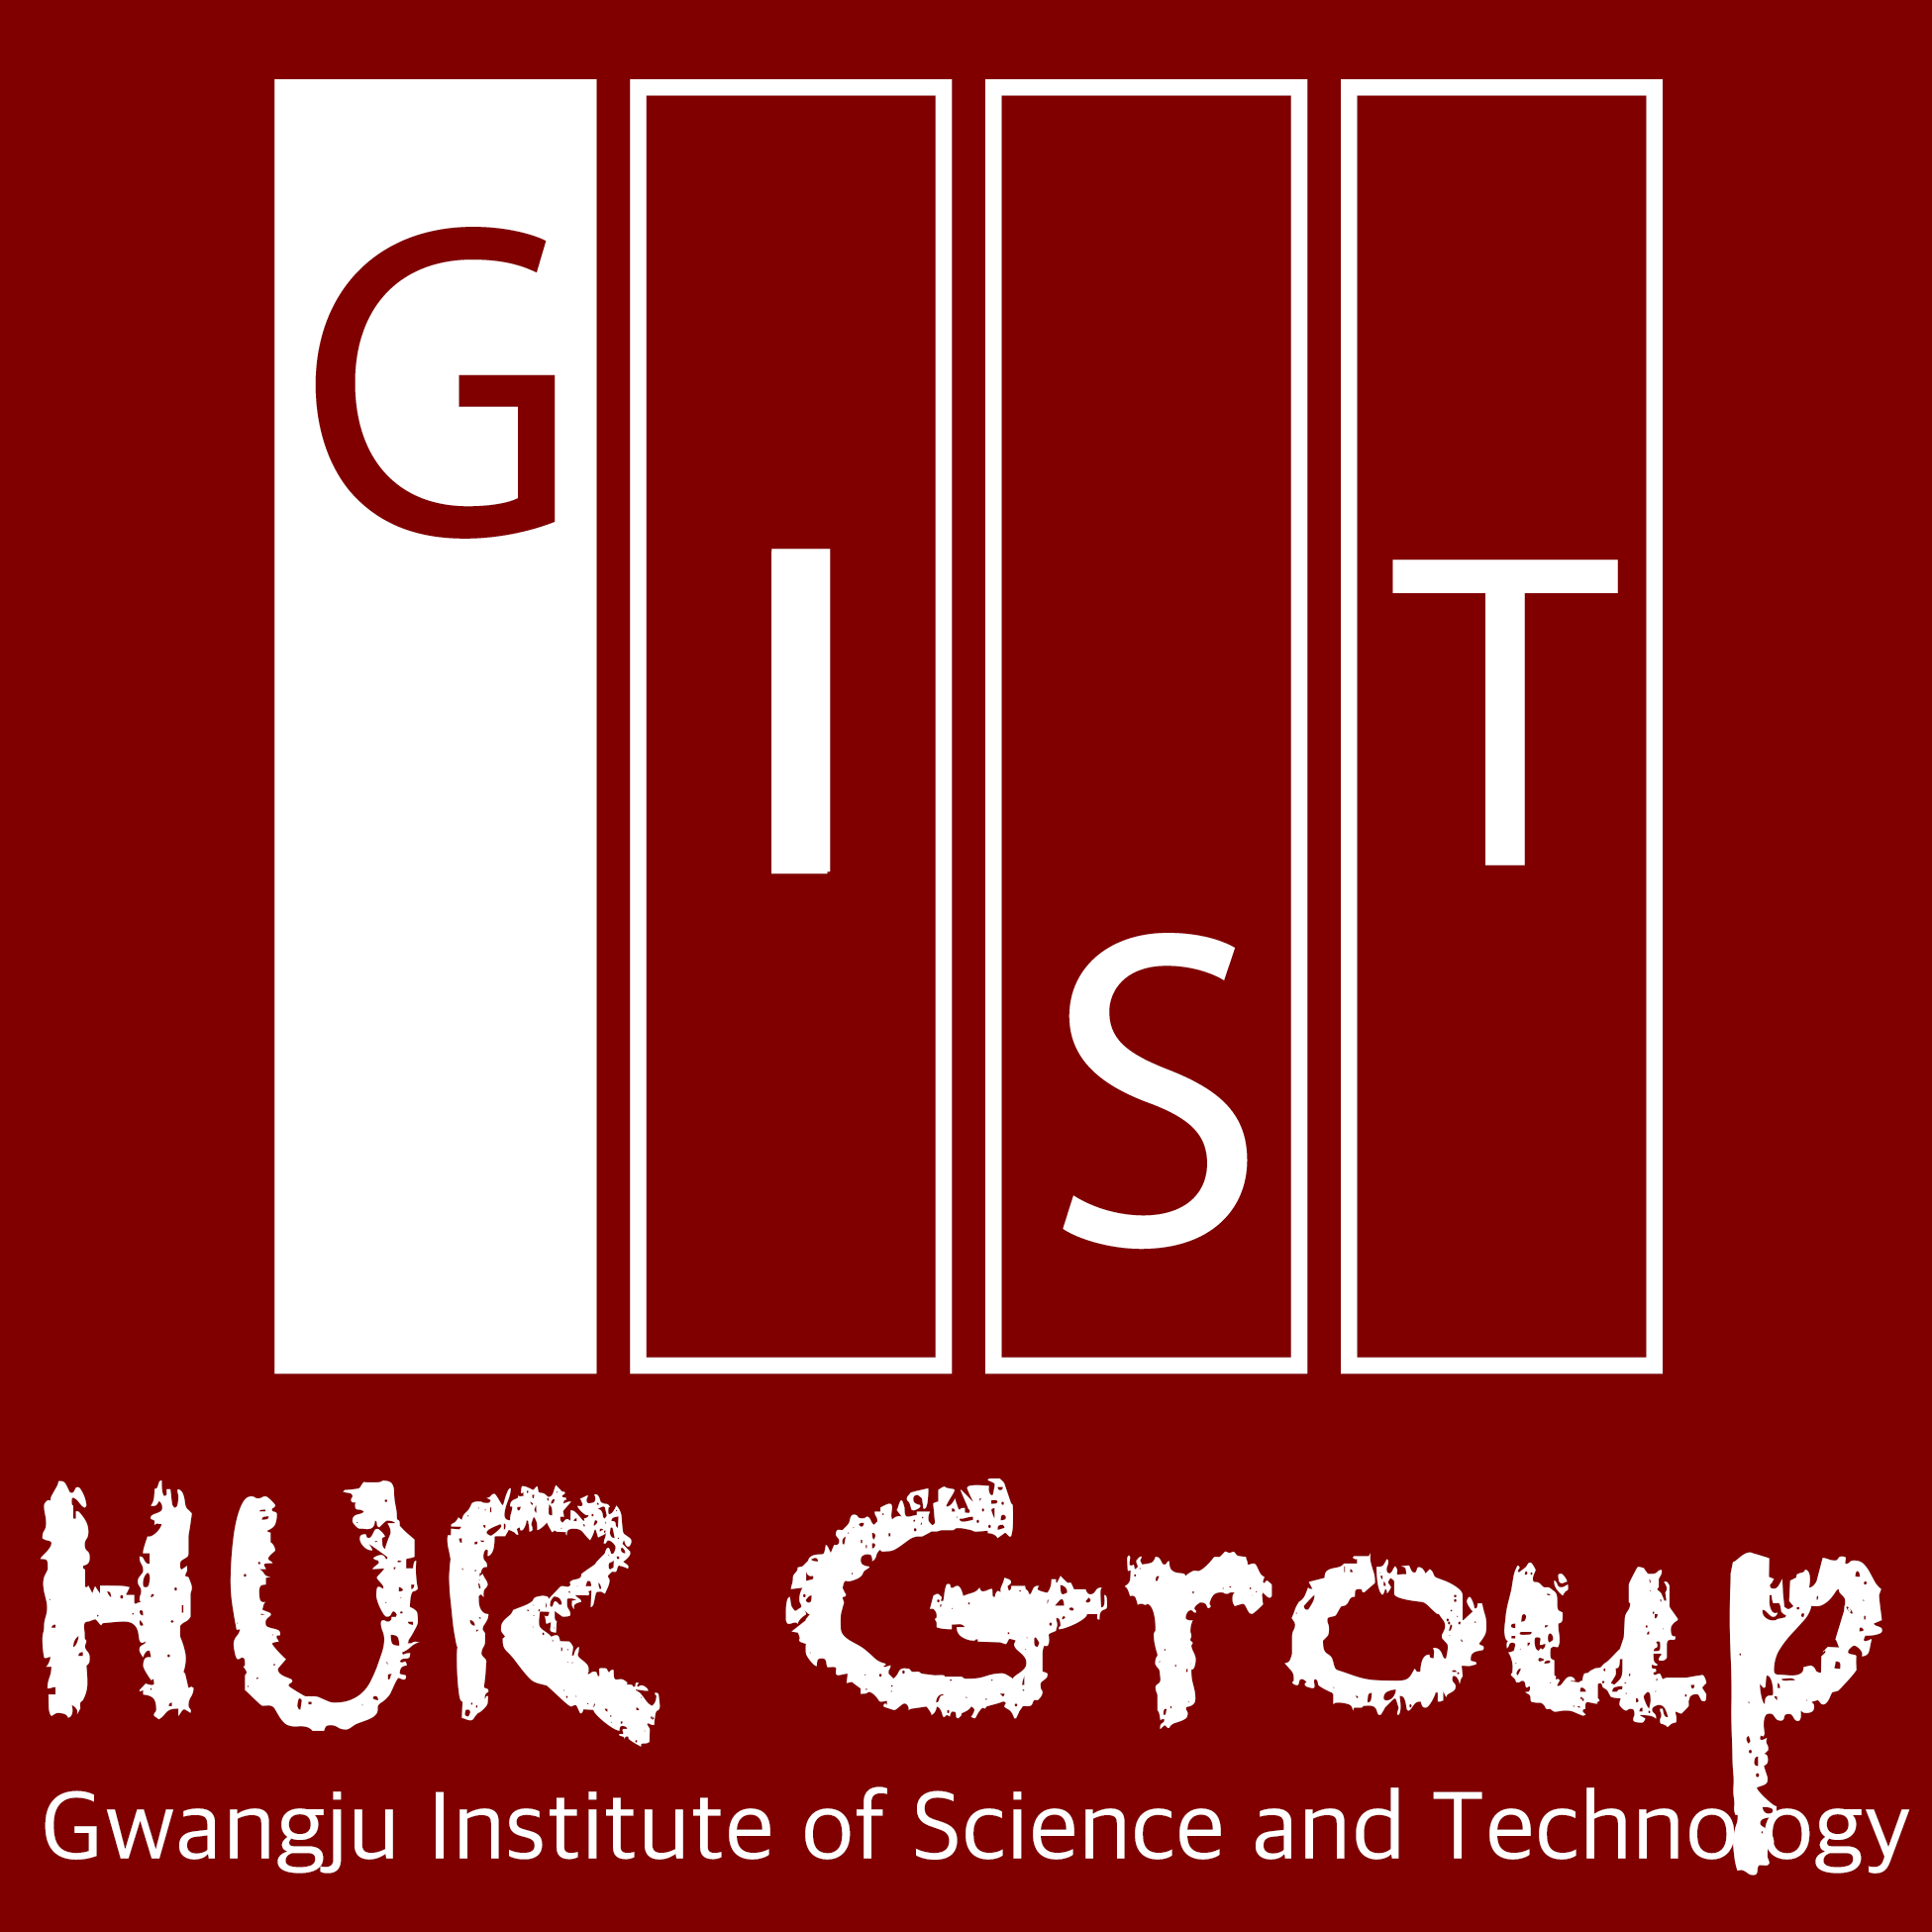 HUR Group